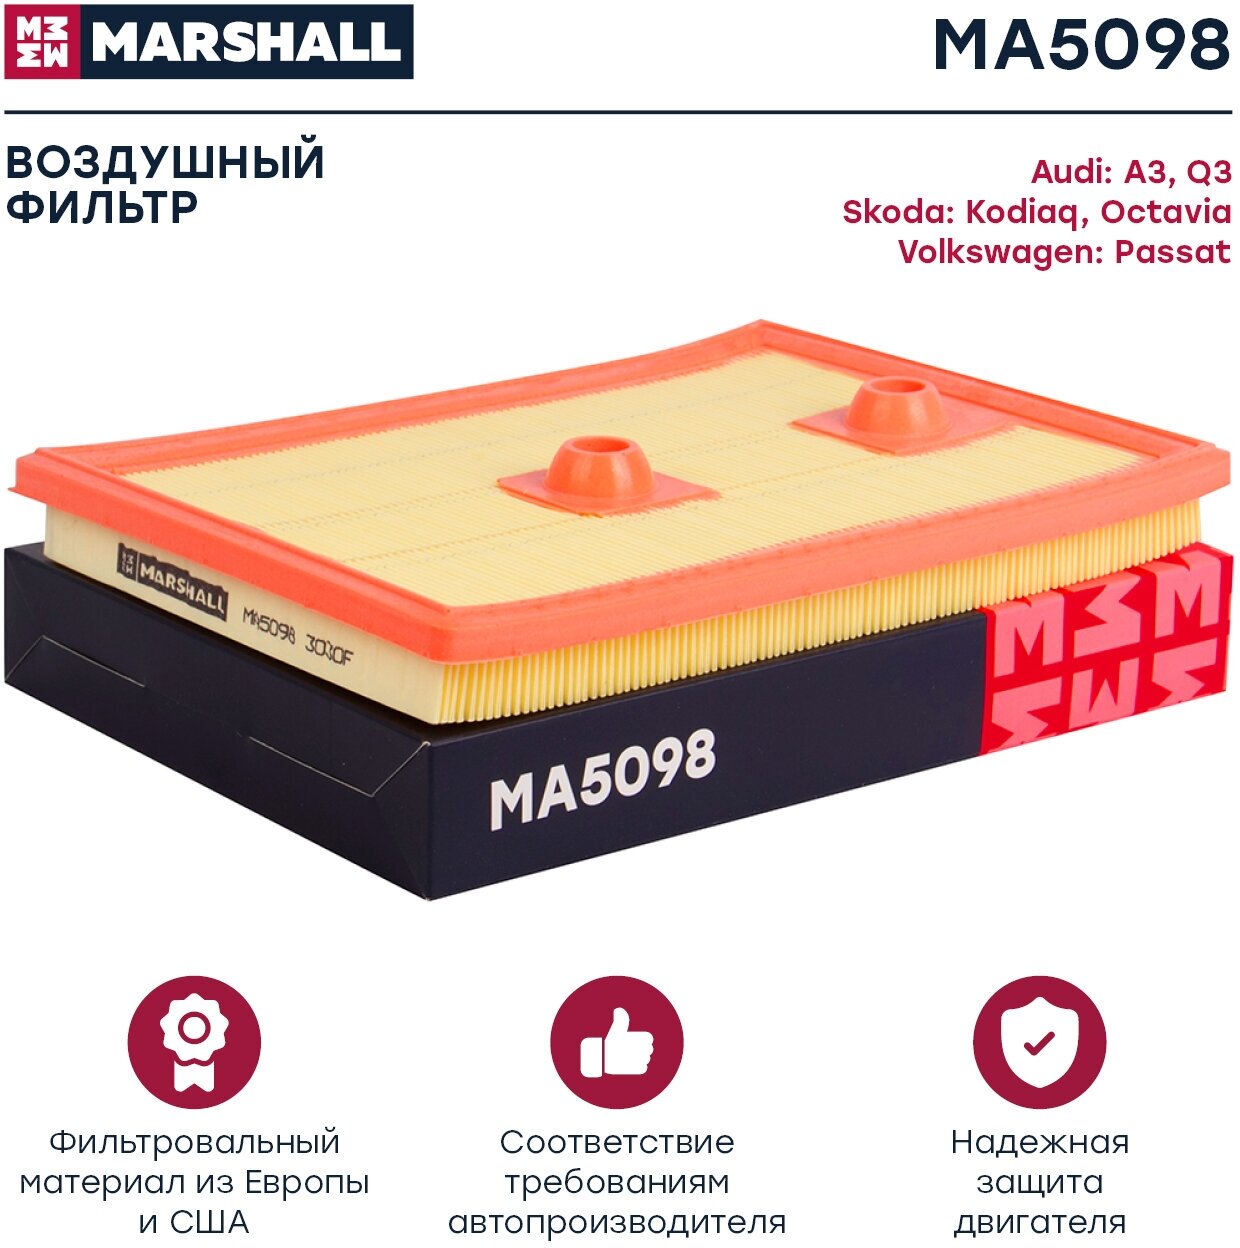 Ma5098_msl MARSHALL арт. MA5098